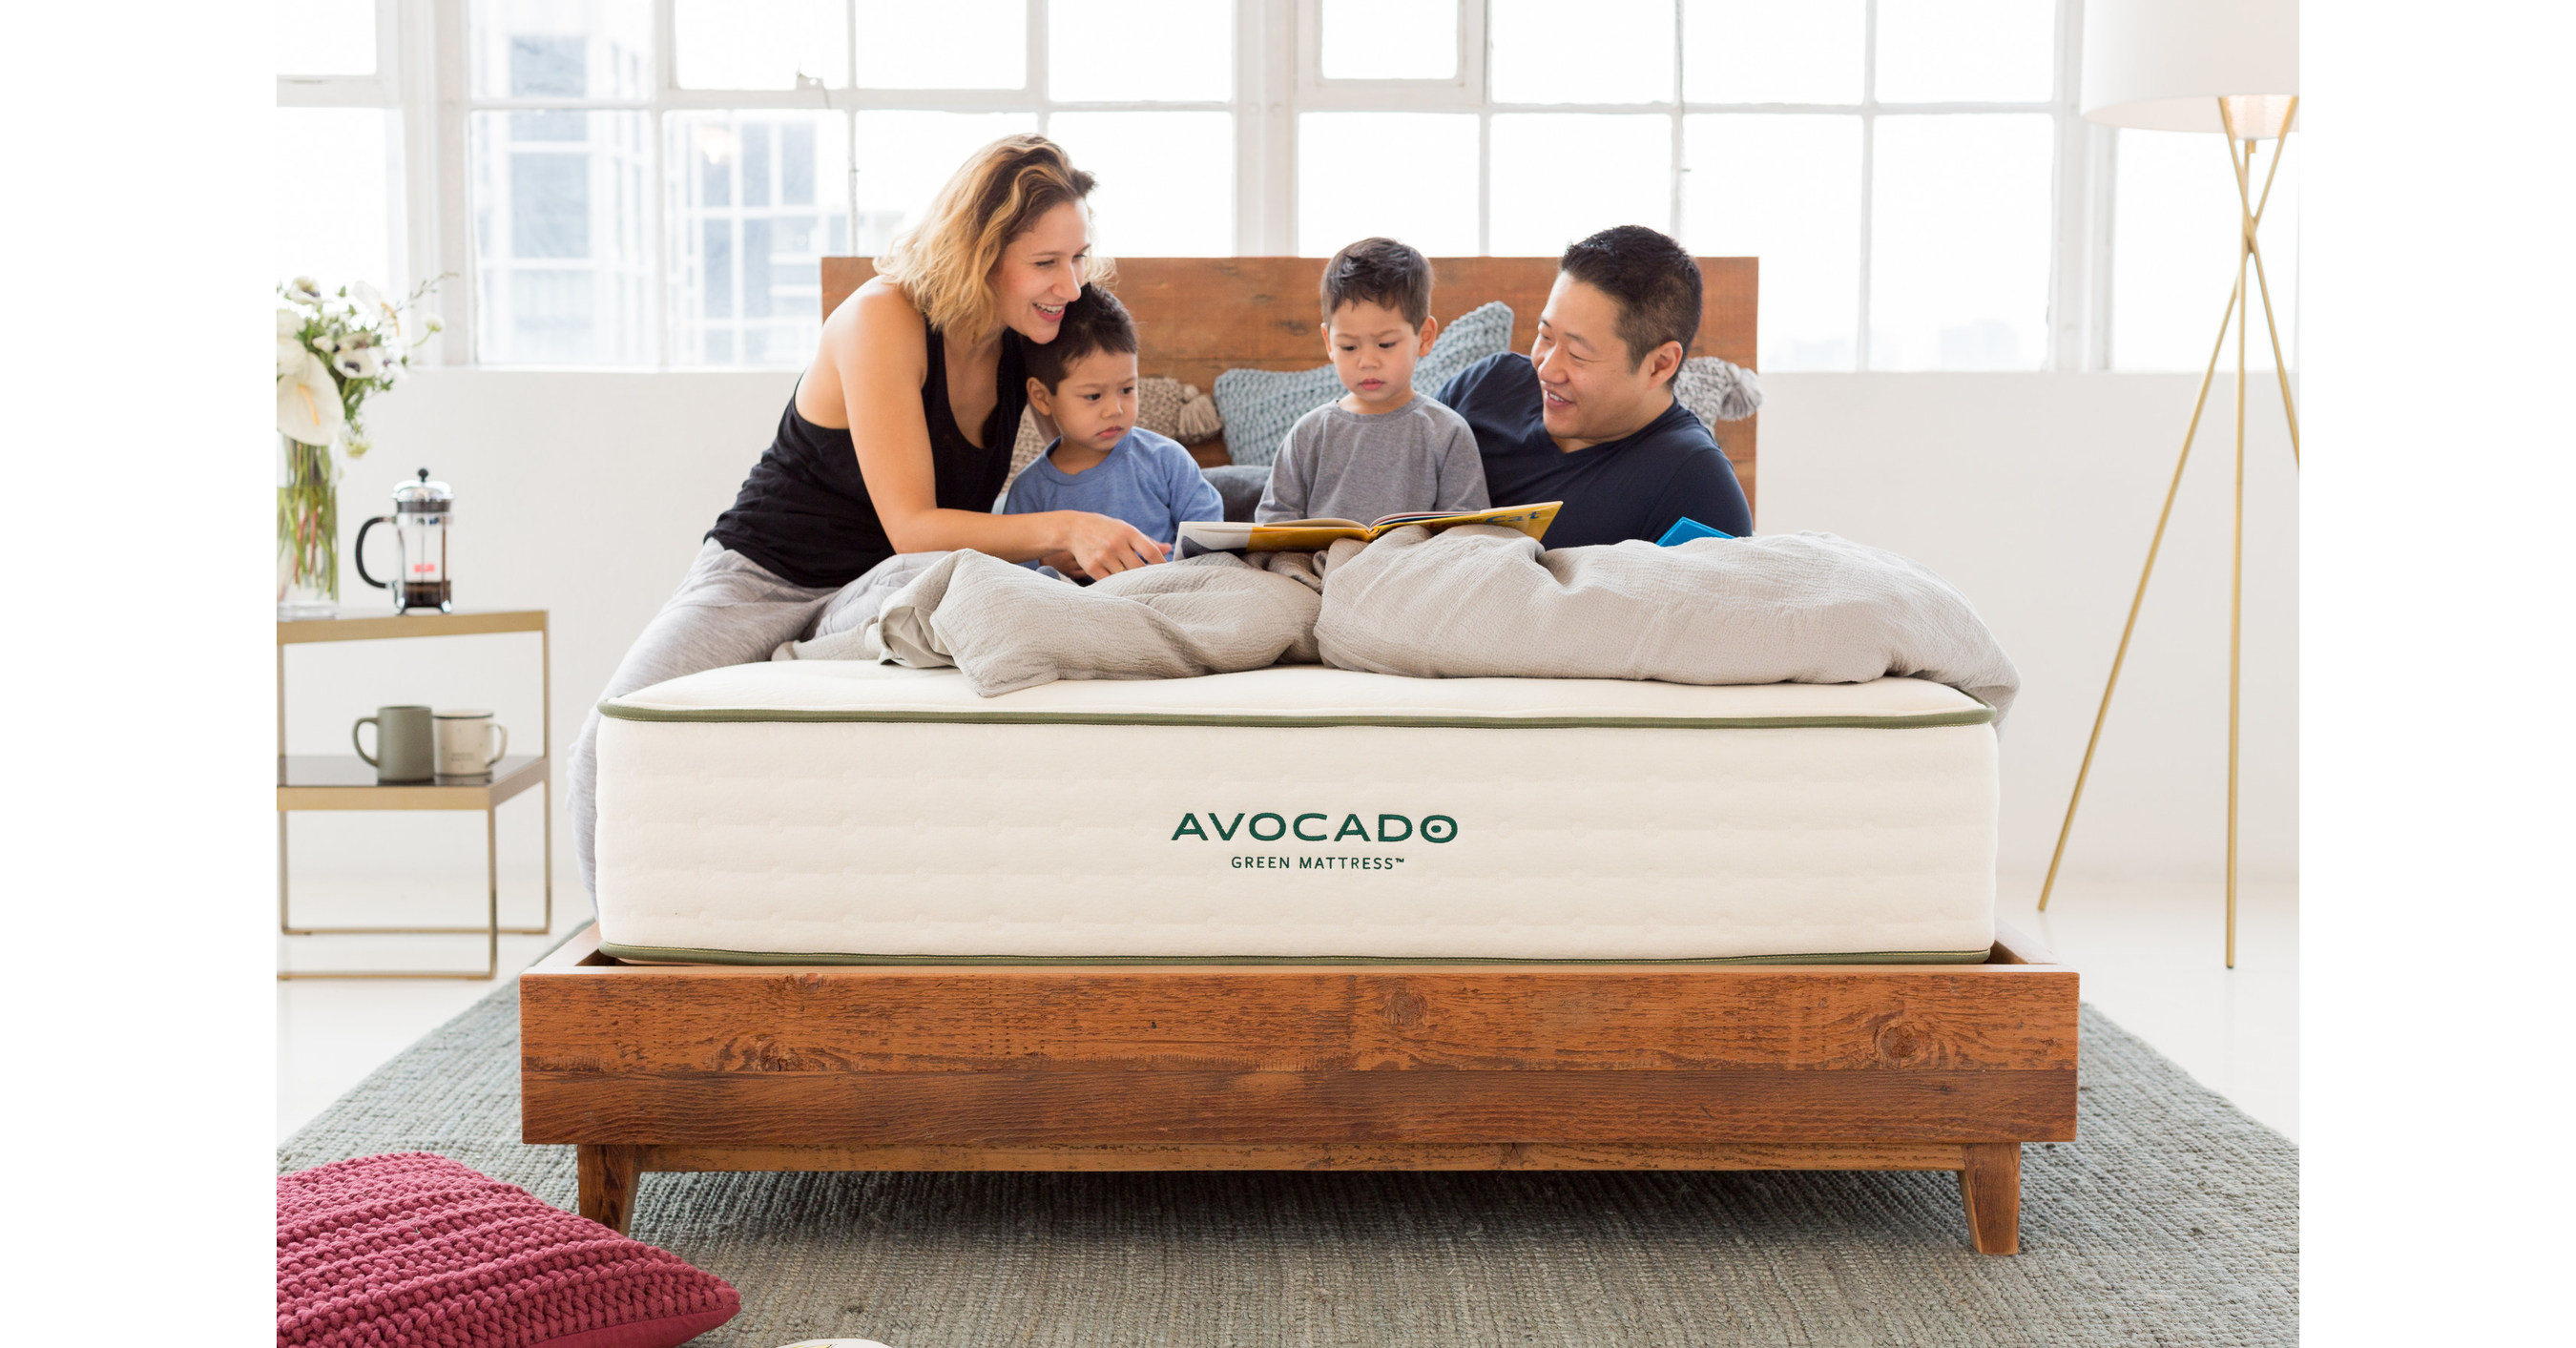 avocado green mattress reclaimed natural wood bed frame